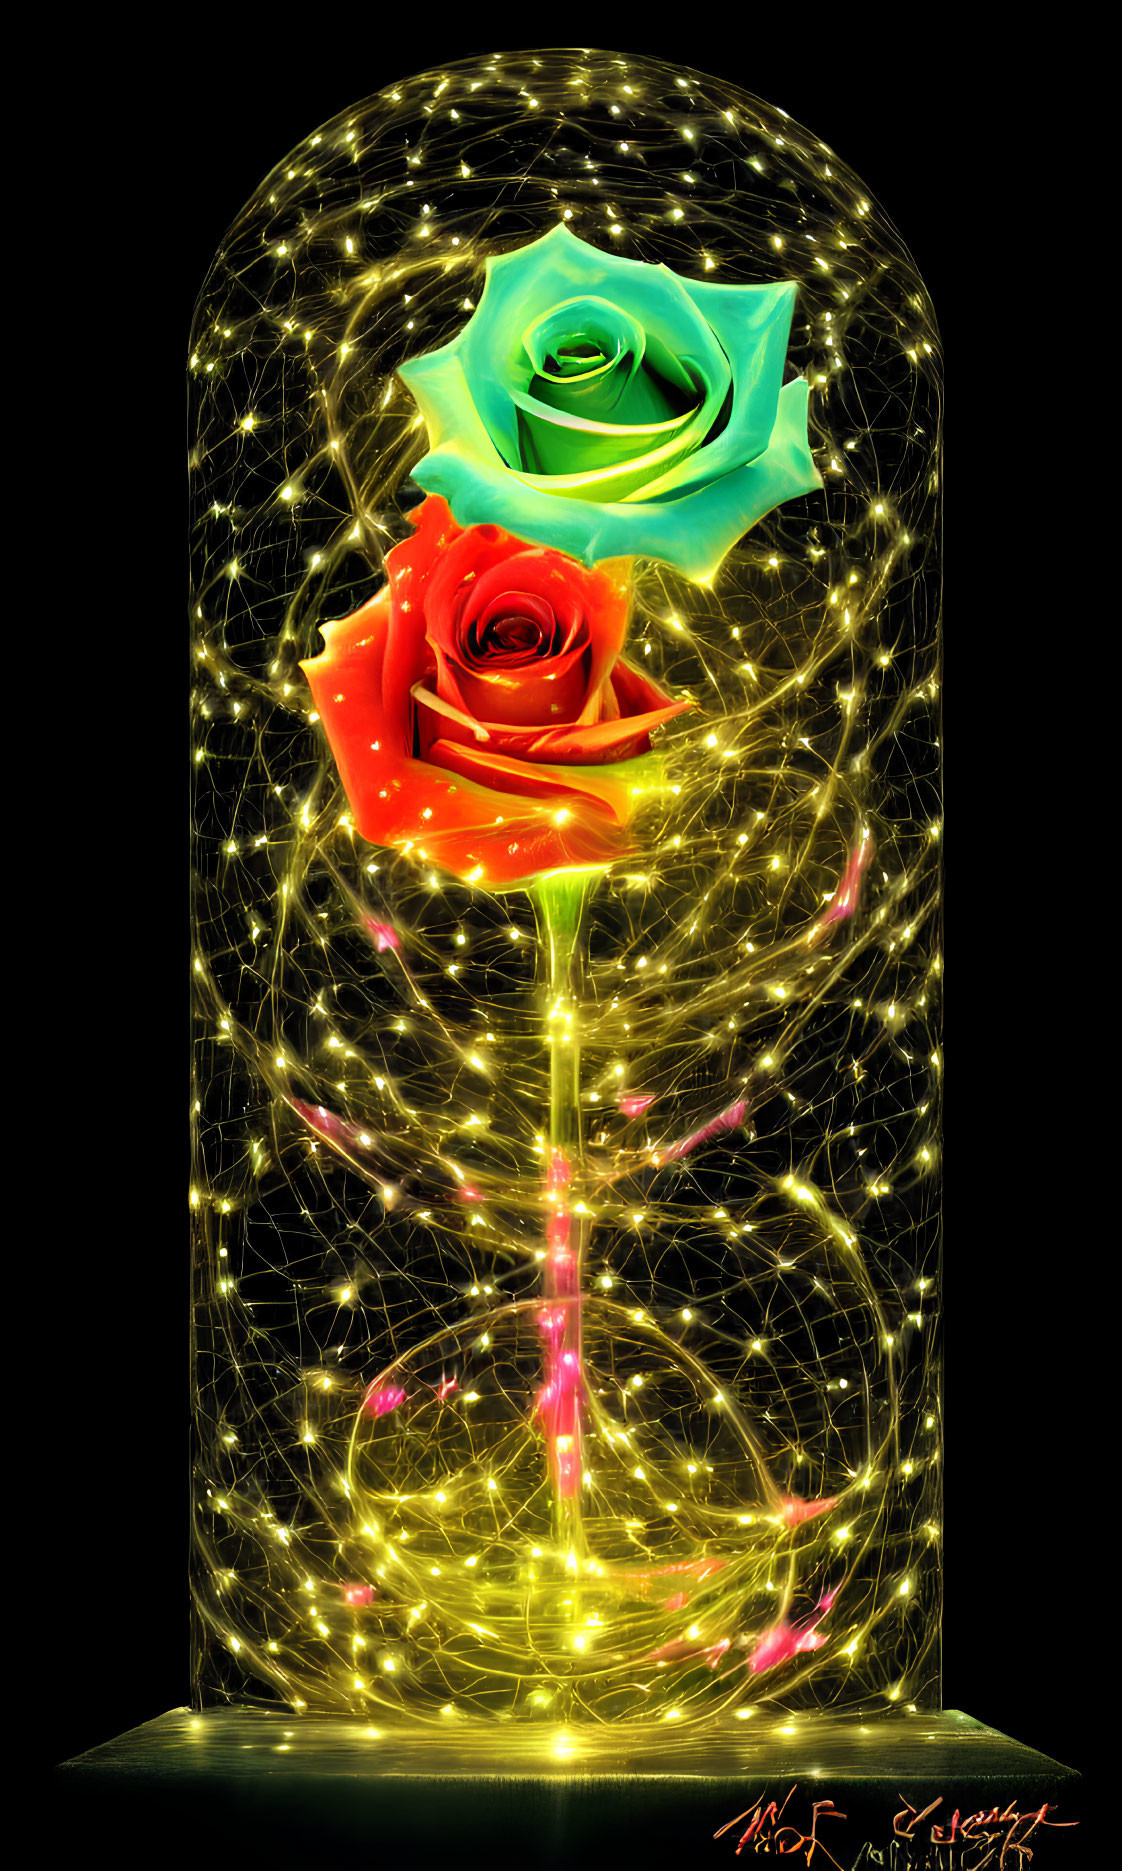 Digital Artwork: Two Roses in Golden Light on Black Background